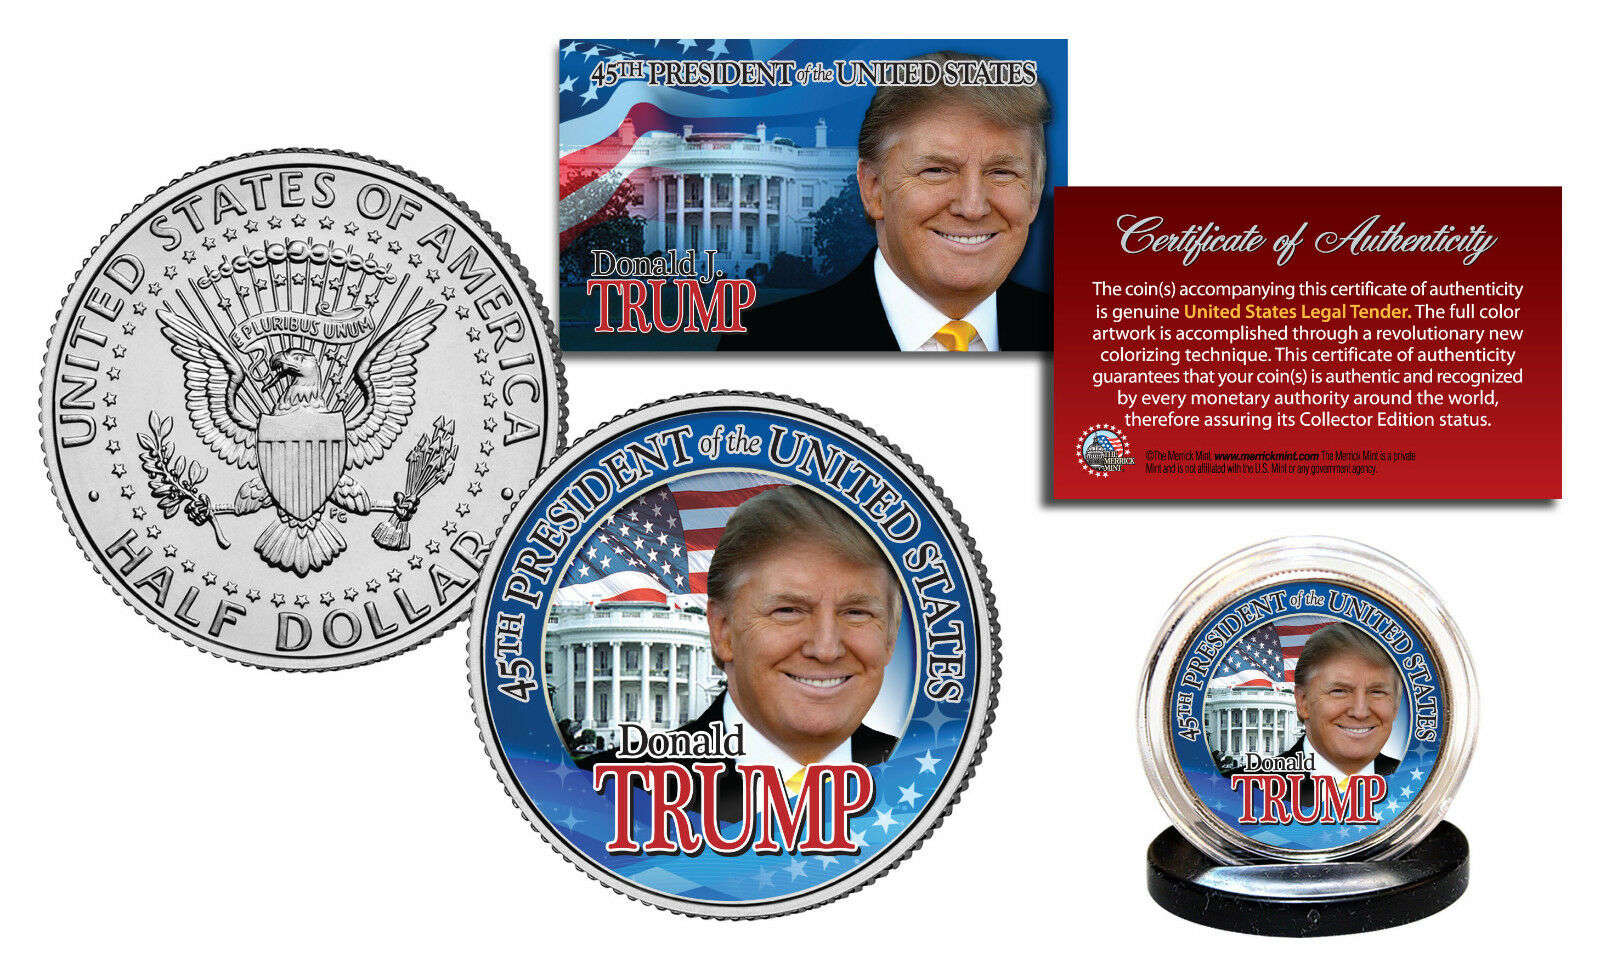 Donald Trump 45th President Official 2016 Jfk Half Dollar U.s. Coin White House